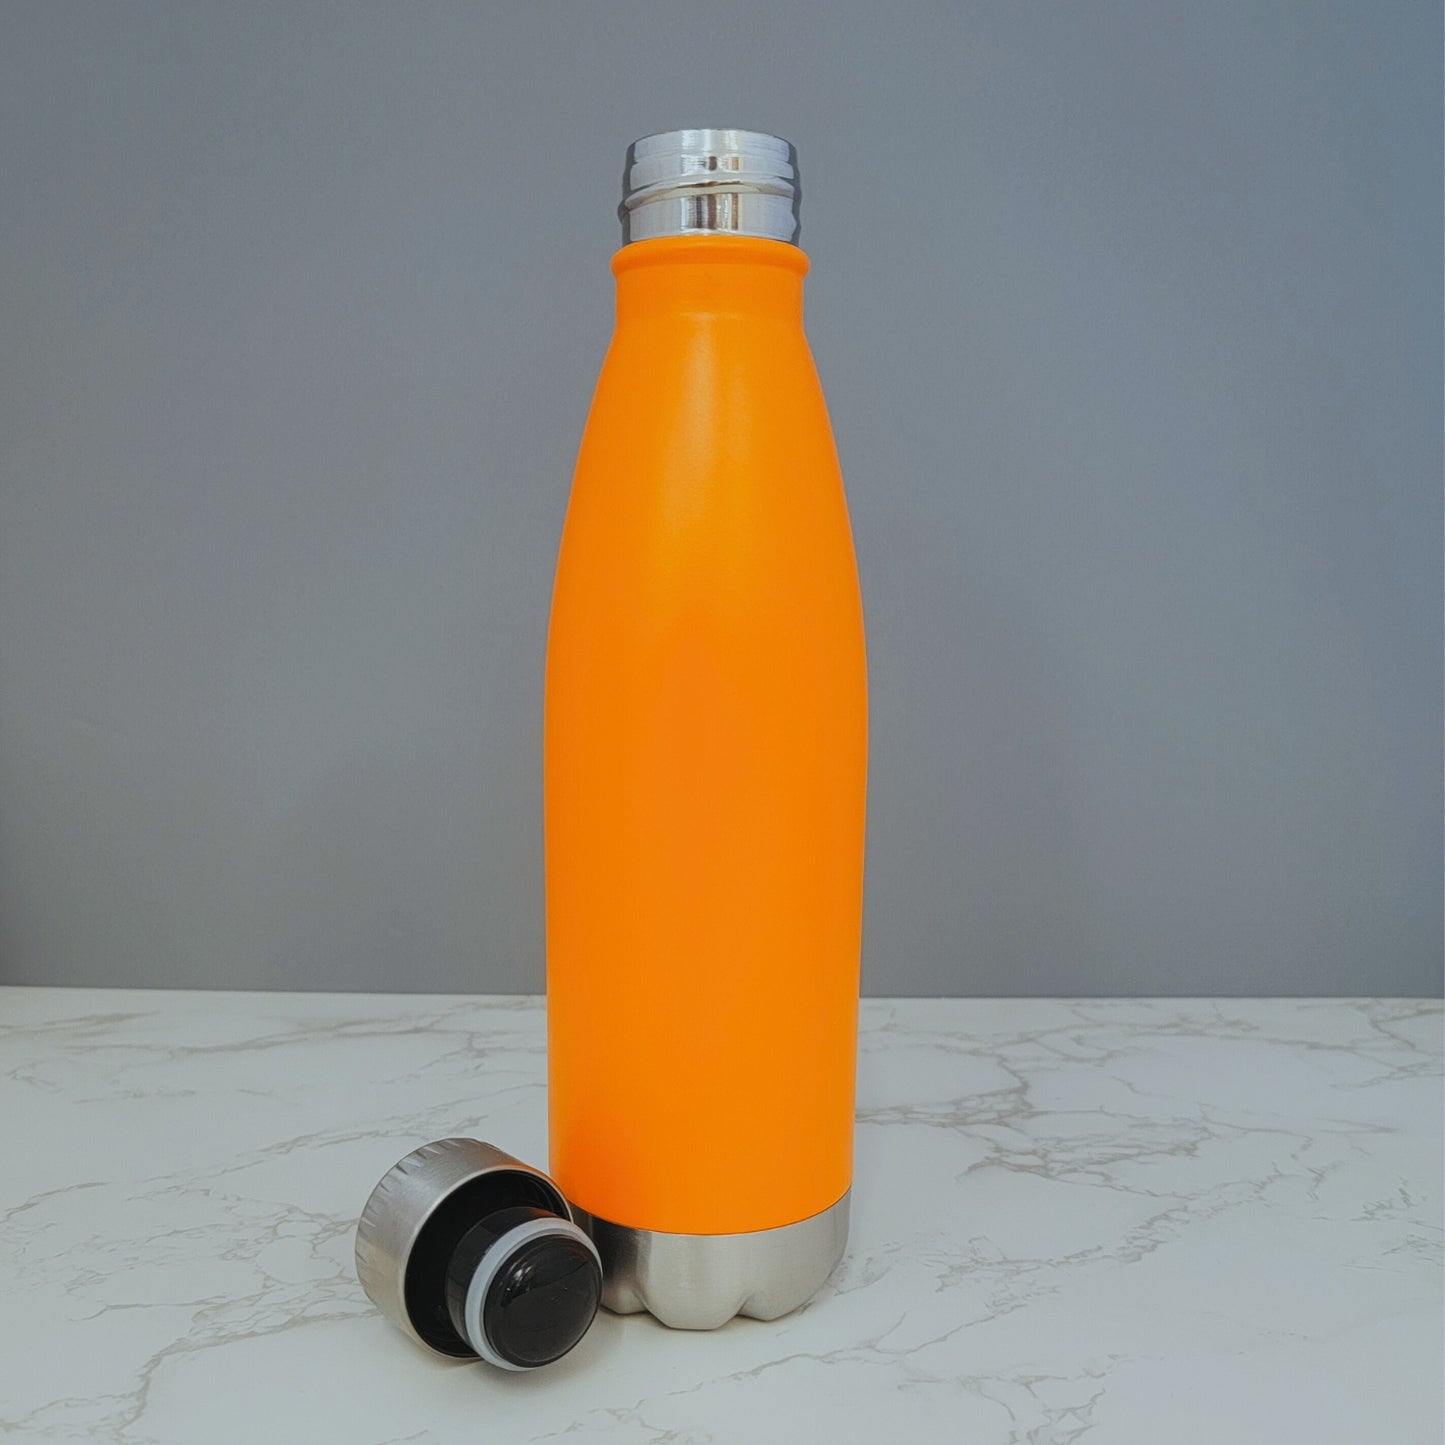 Back To School With Bus Design Orange 17oz Water Bottle LA5126